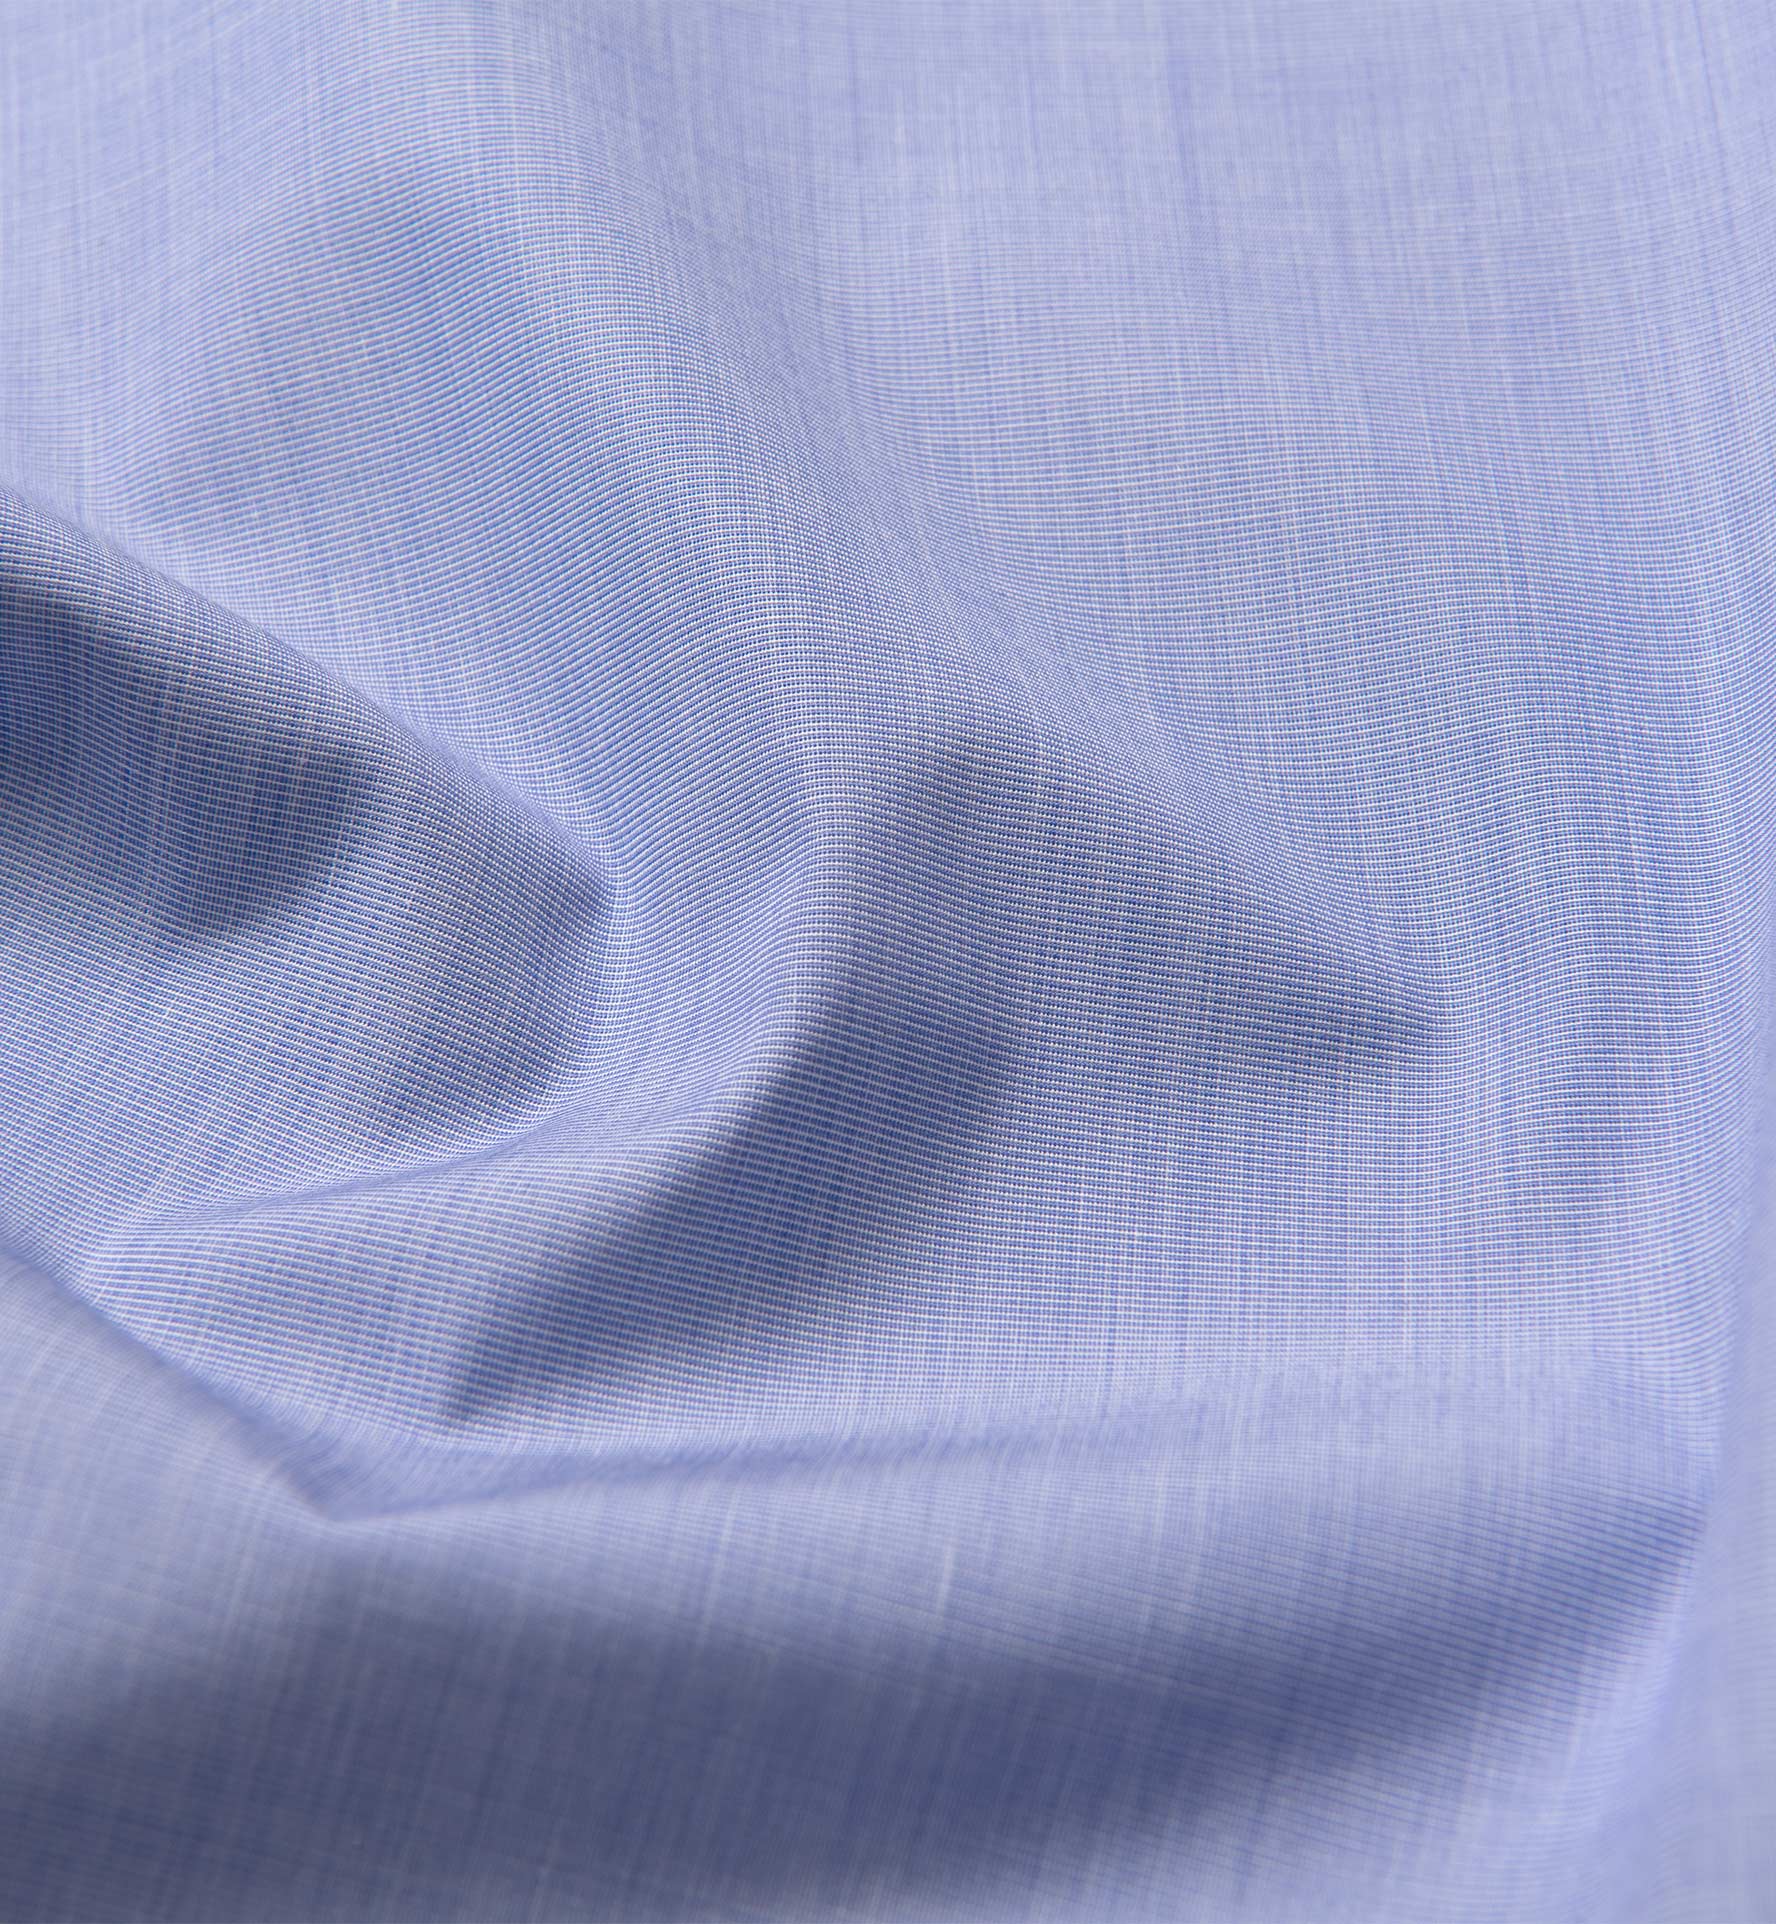 Thomas Mason Luxury Blue End-on-End Shirts by Proper Cloth